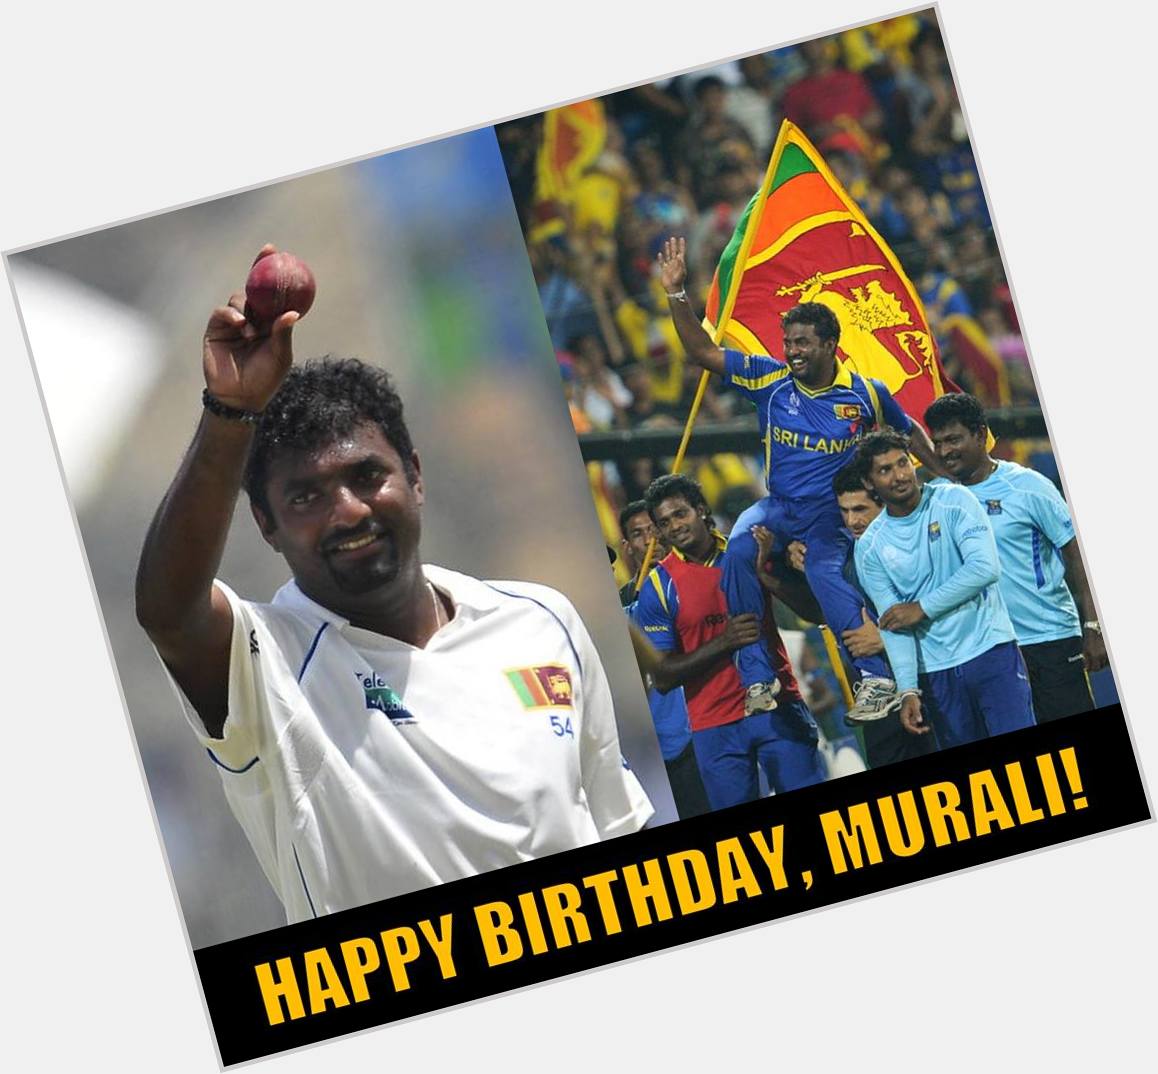 Happy birthday, Muttiah Muralitharan! 
The former Sri Lanka Cricket spin wizard turns 43 today. 